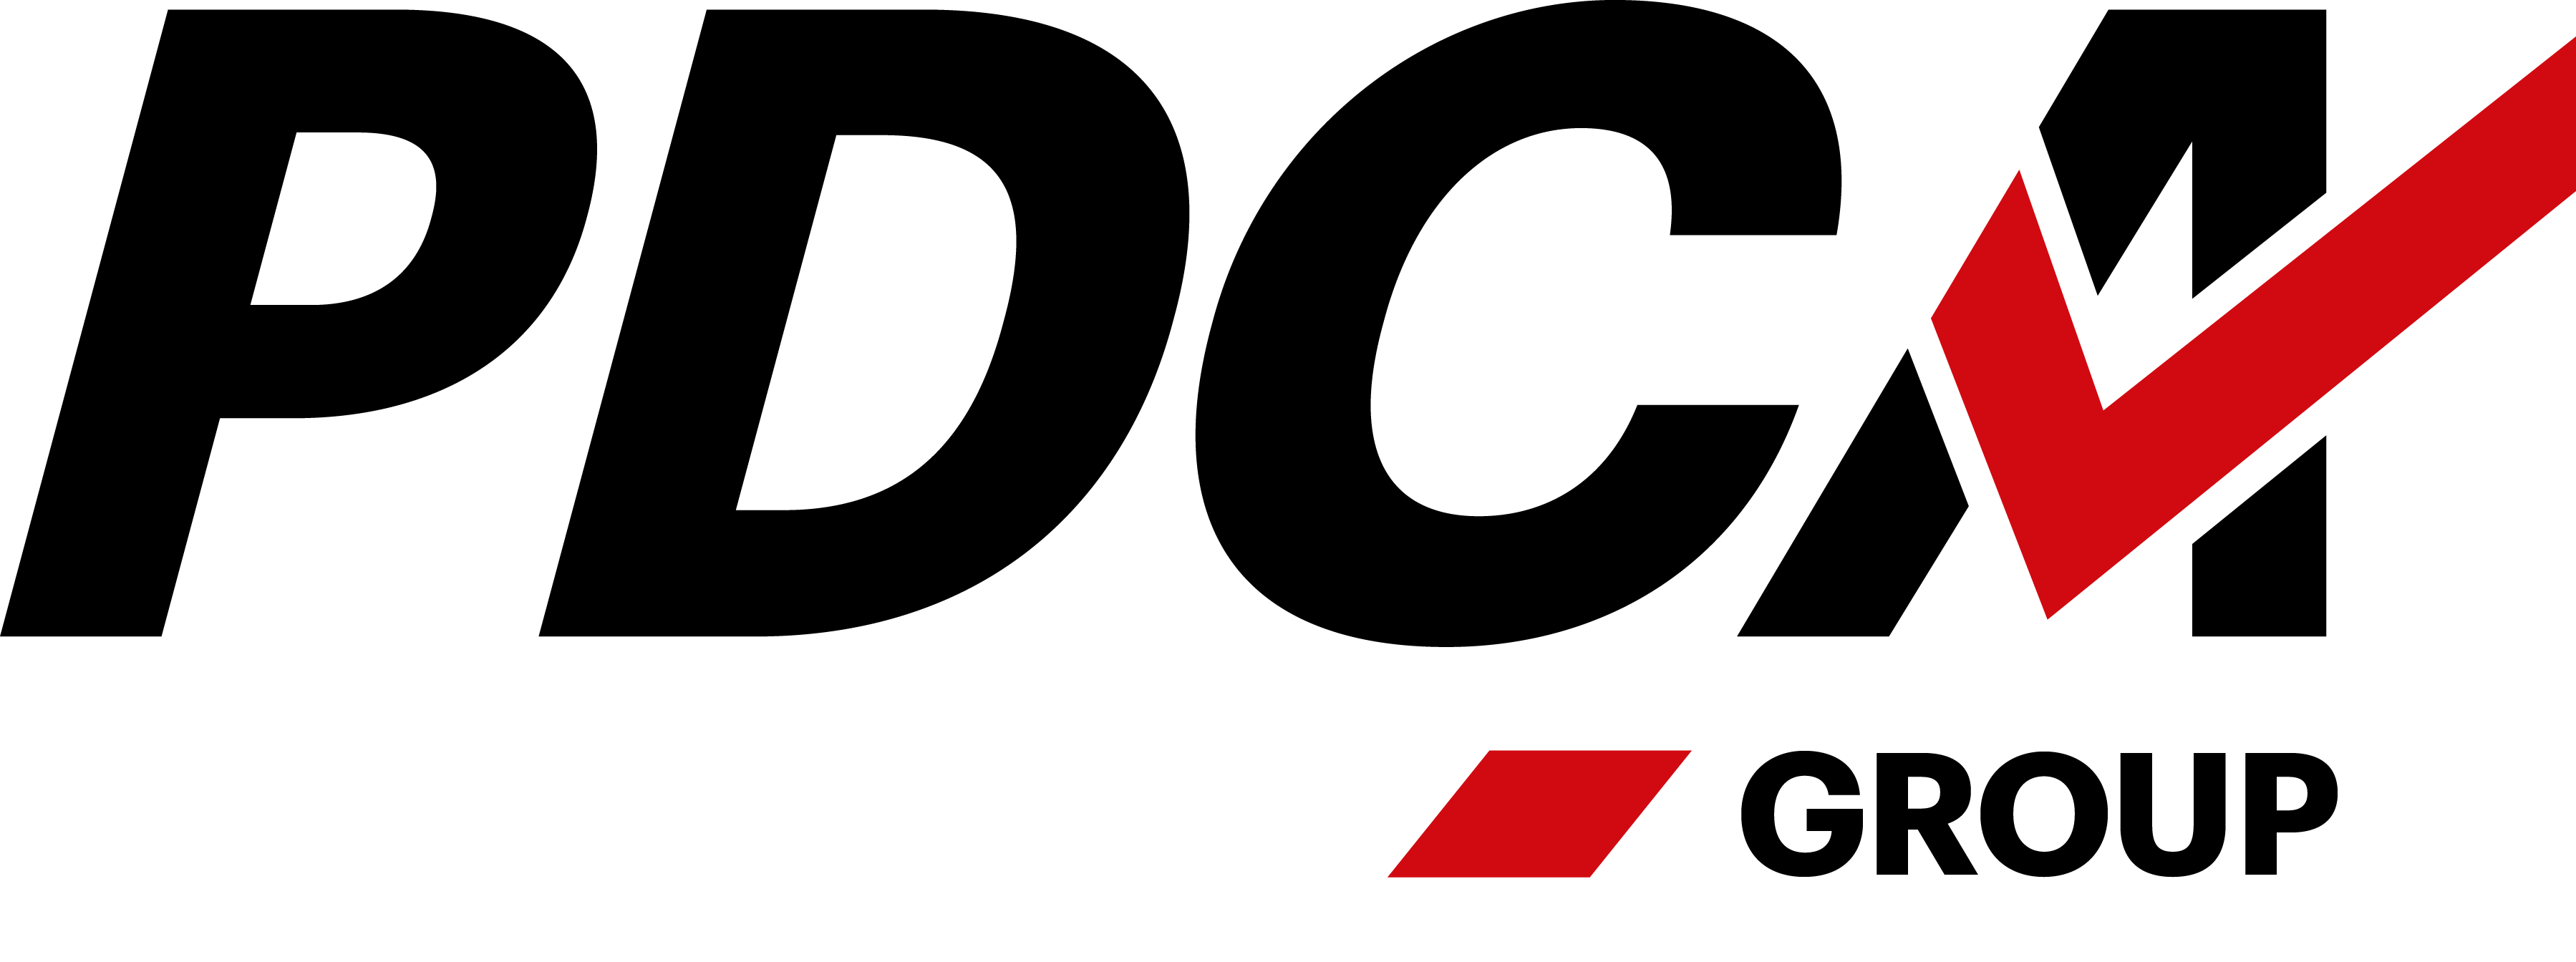 PDCA Group Logo